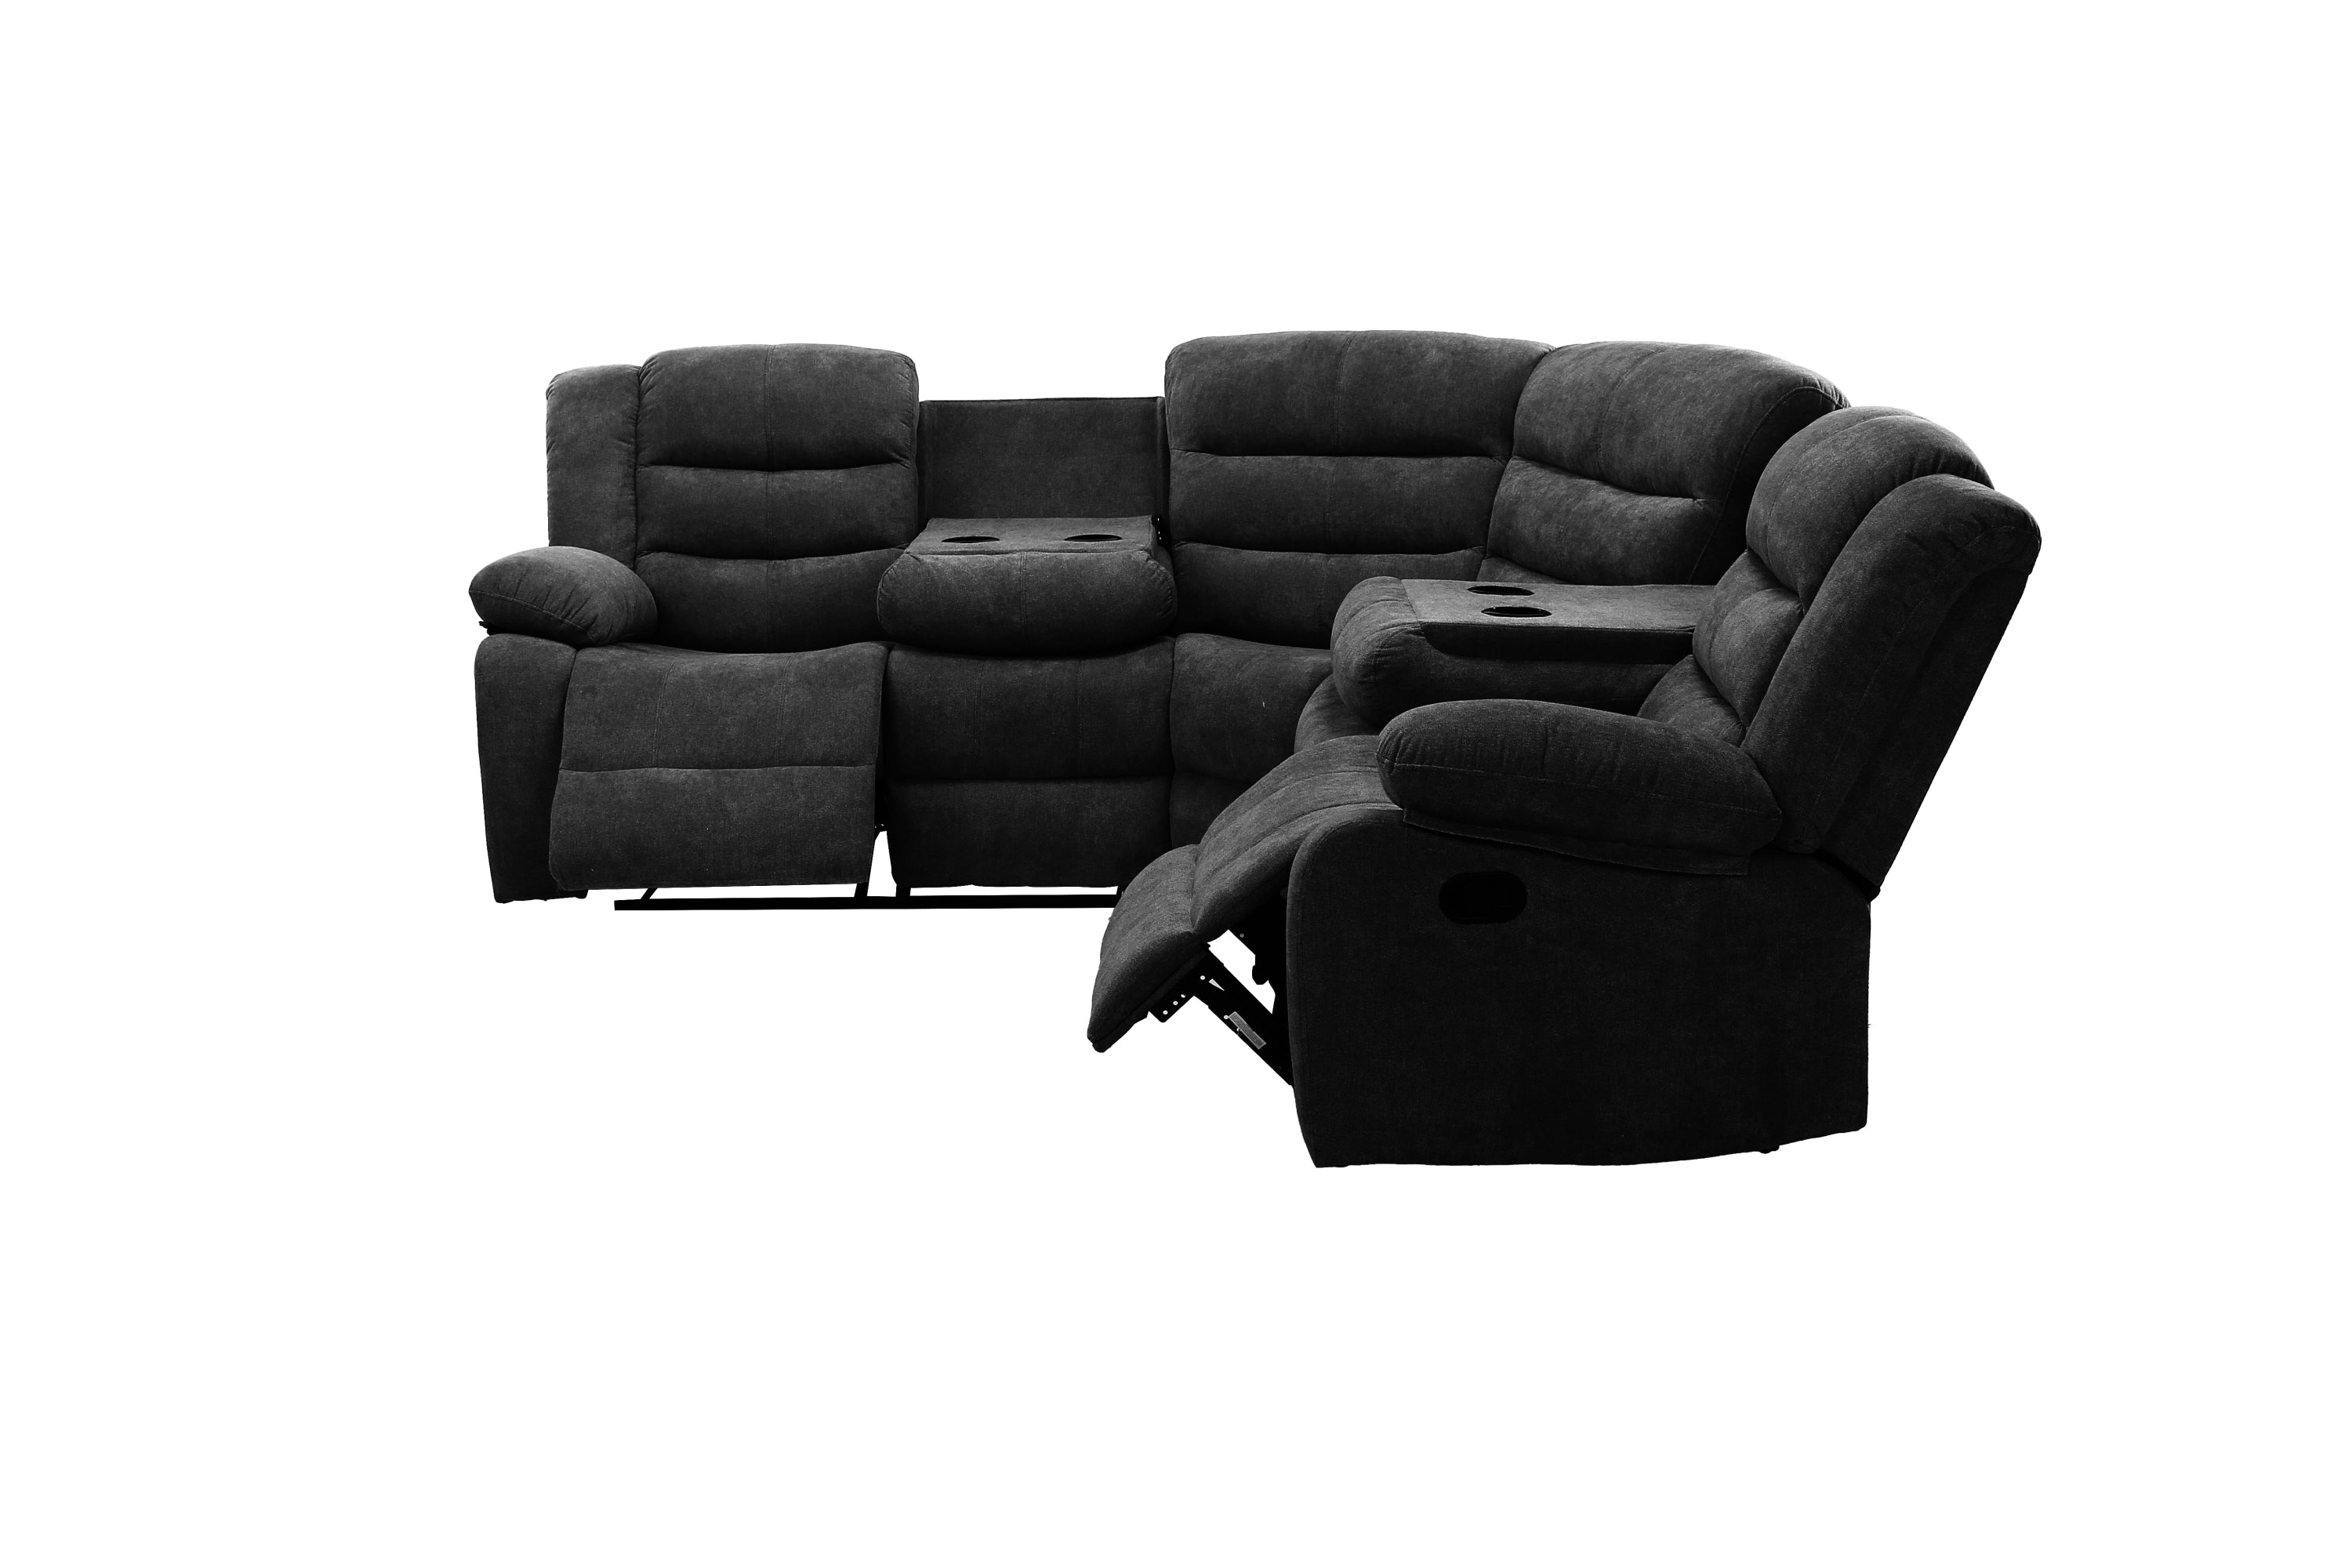 Sectional Manual Recliner Living Room Set (Black)